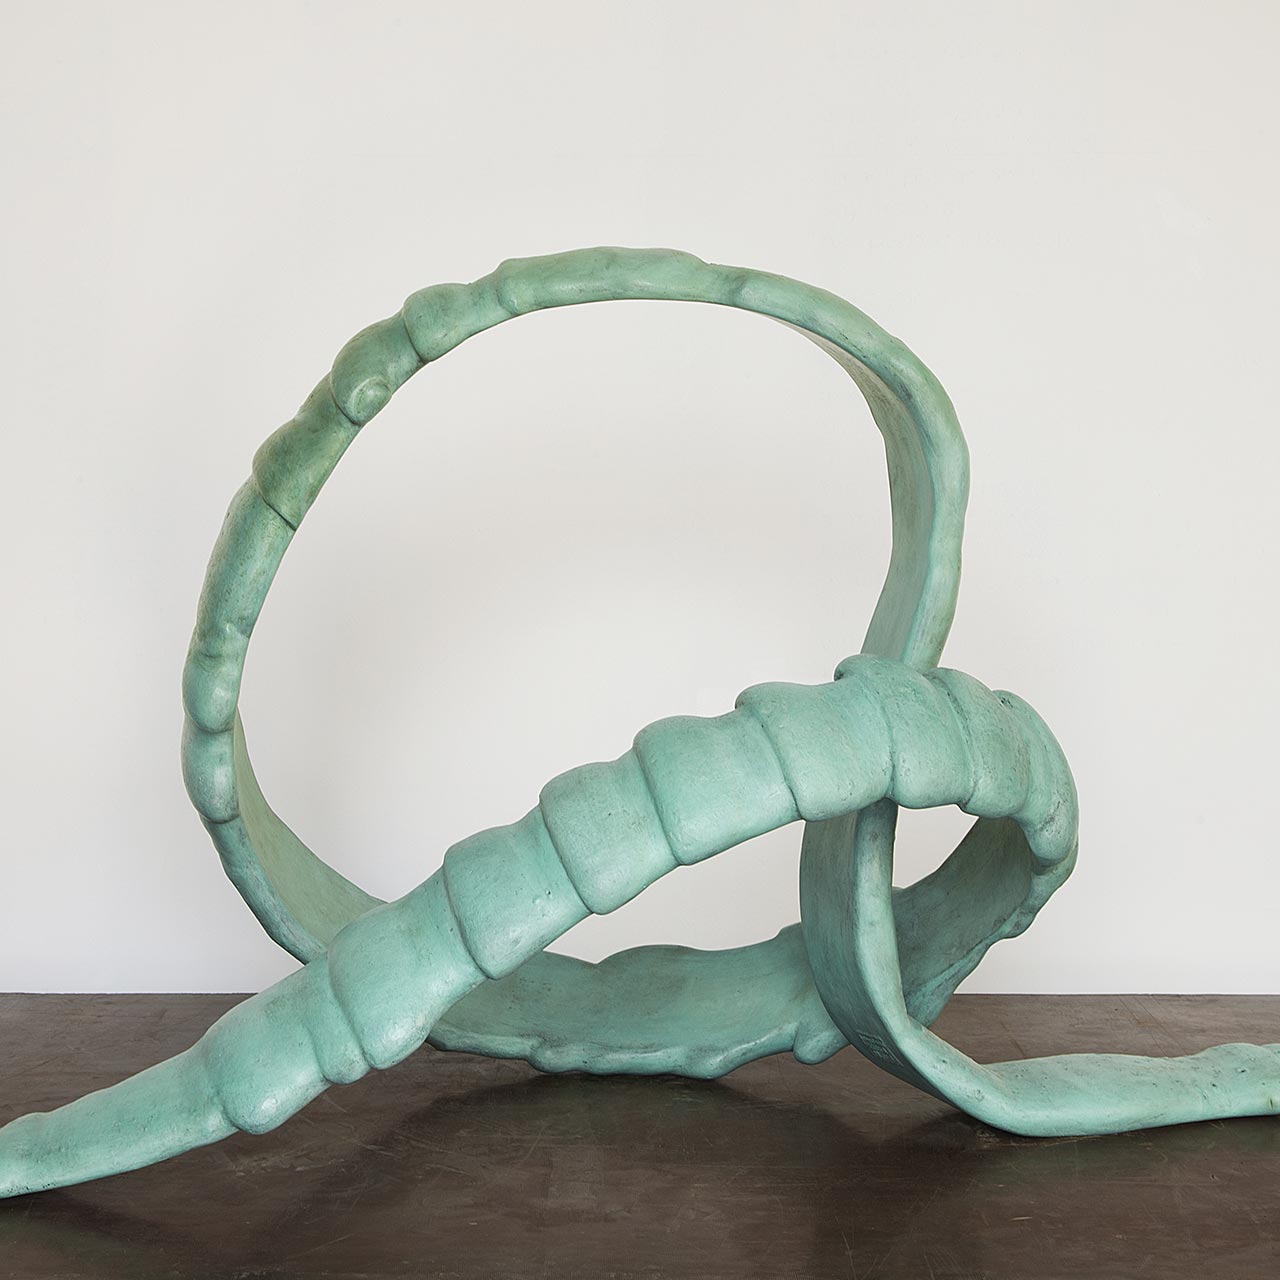 Battaglia Foundry Sculpture Prize #01